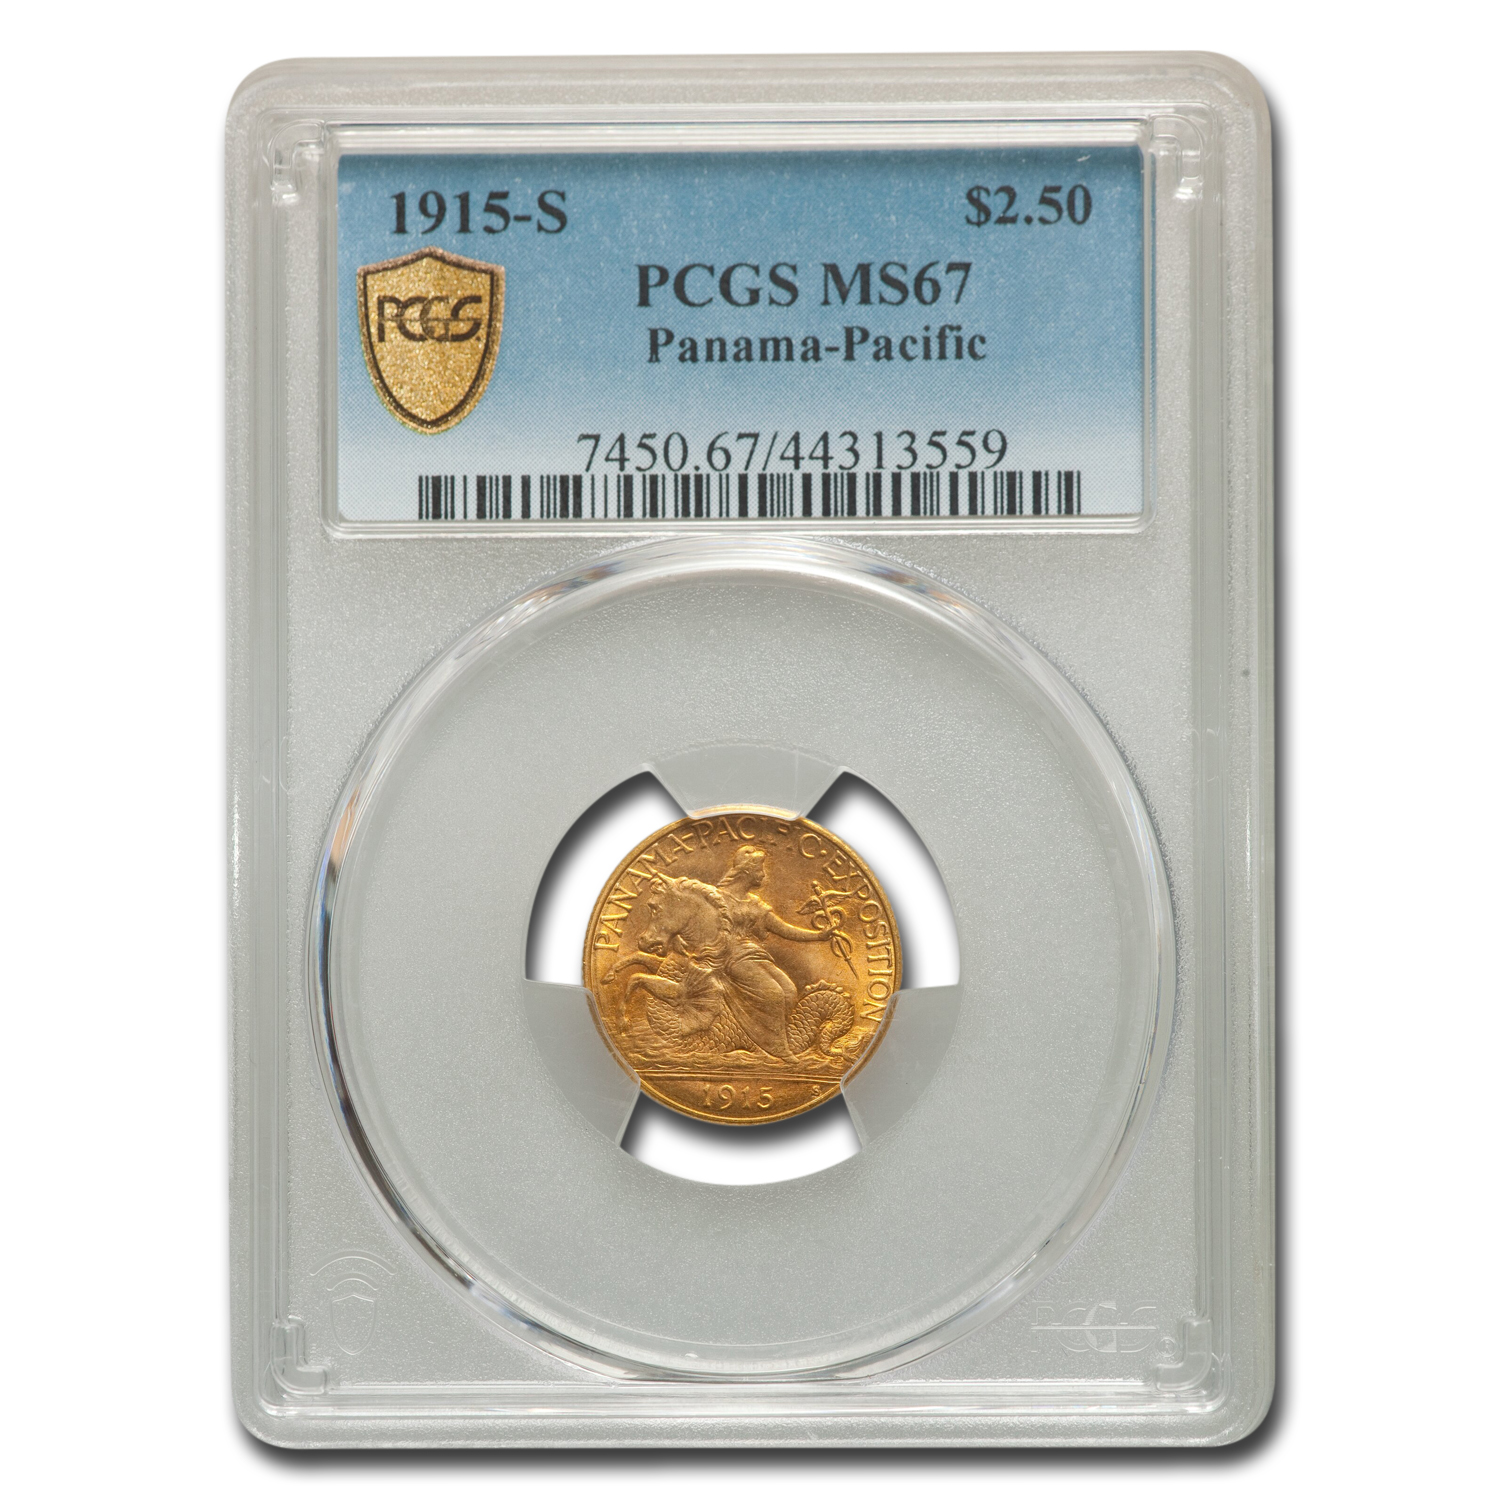 Buy 1915-S Gold $1.00 Panama-Pacific MS-67 PCGS